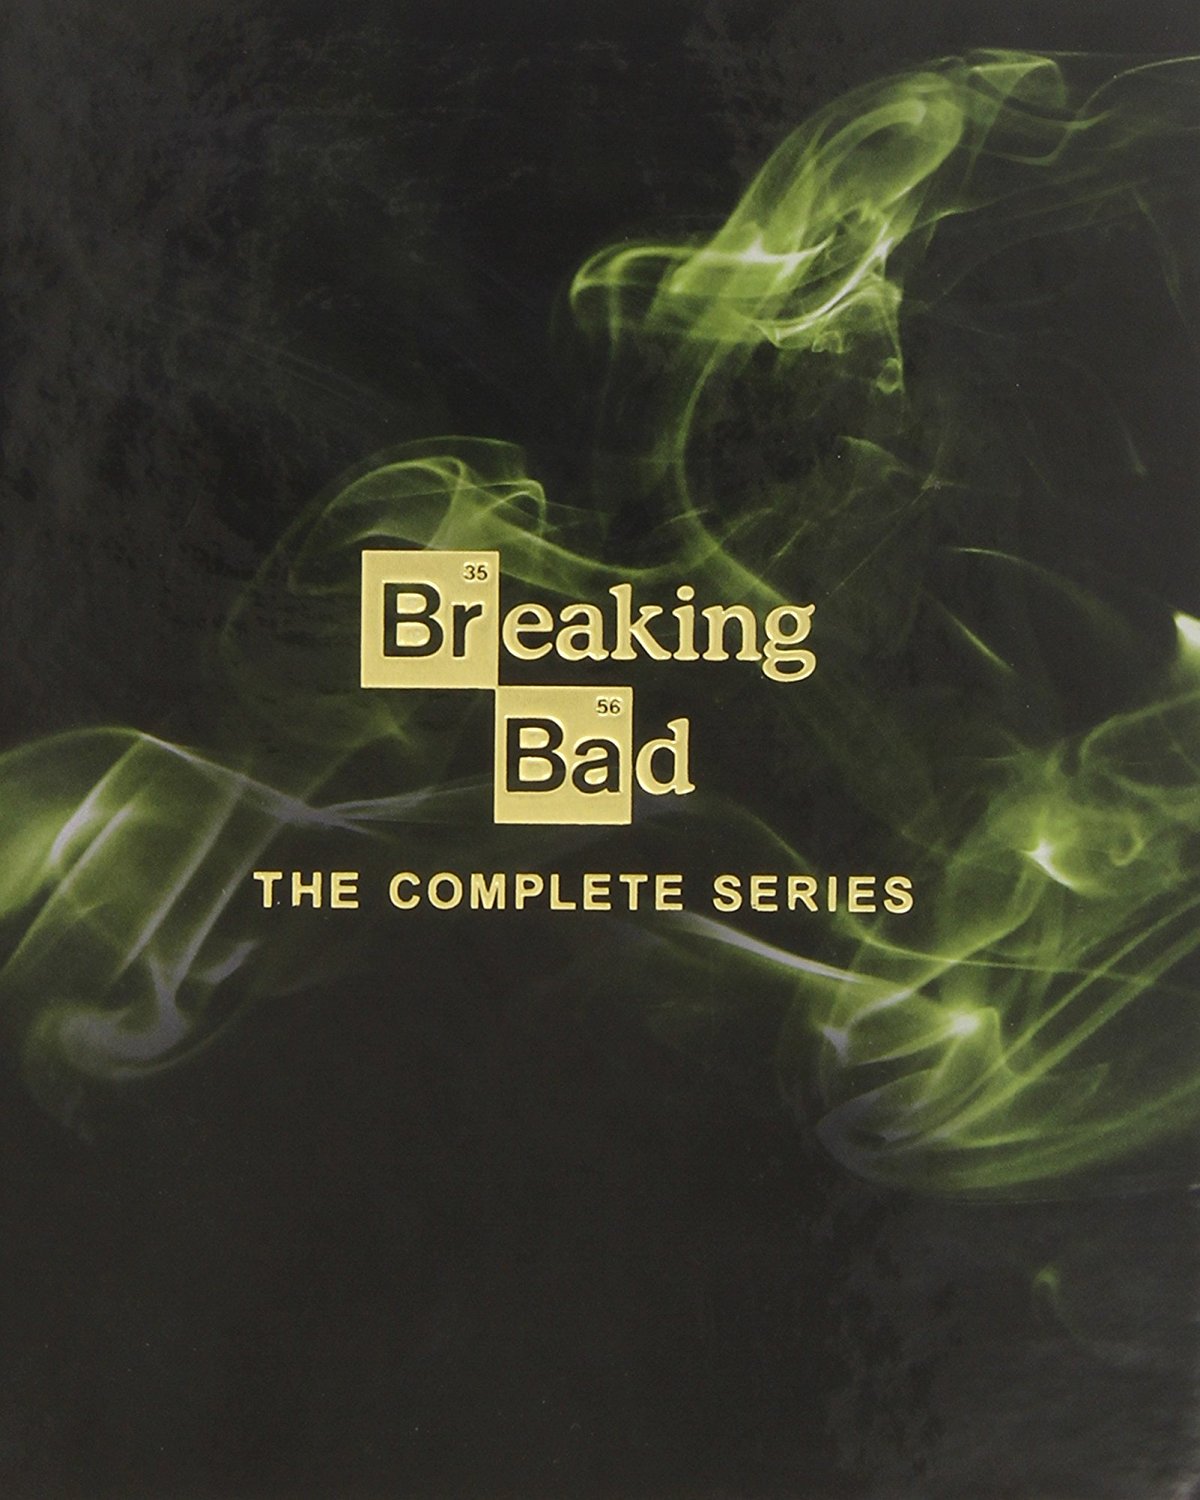 Complete Series of “Breaking Bad” – Just $36.99!